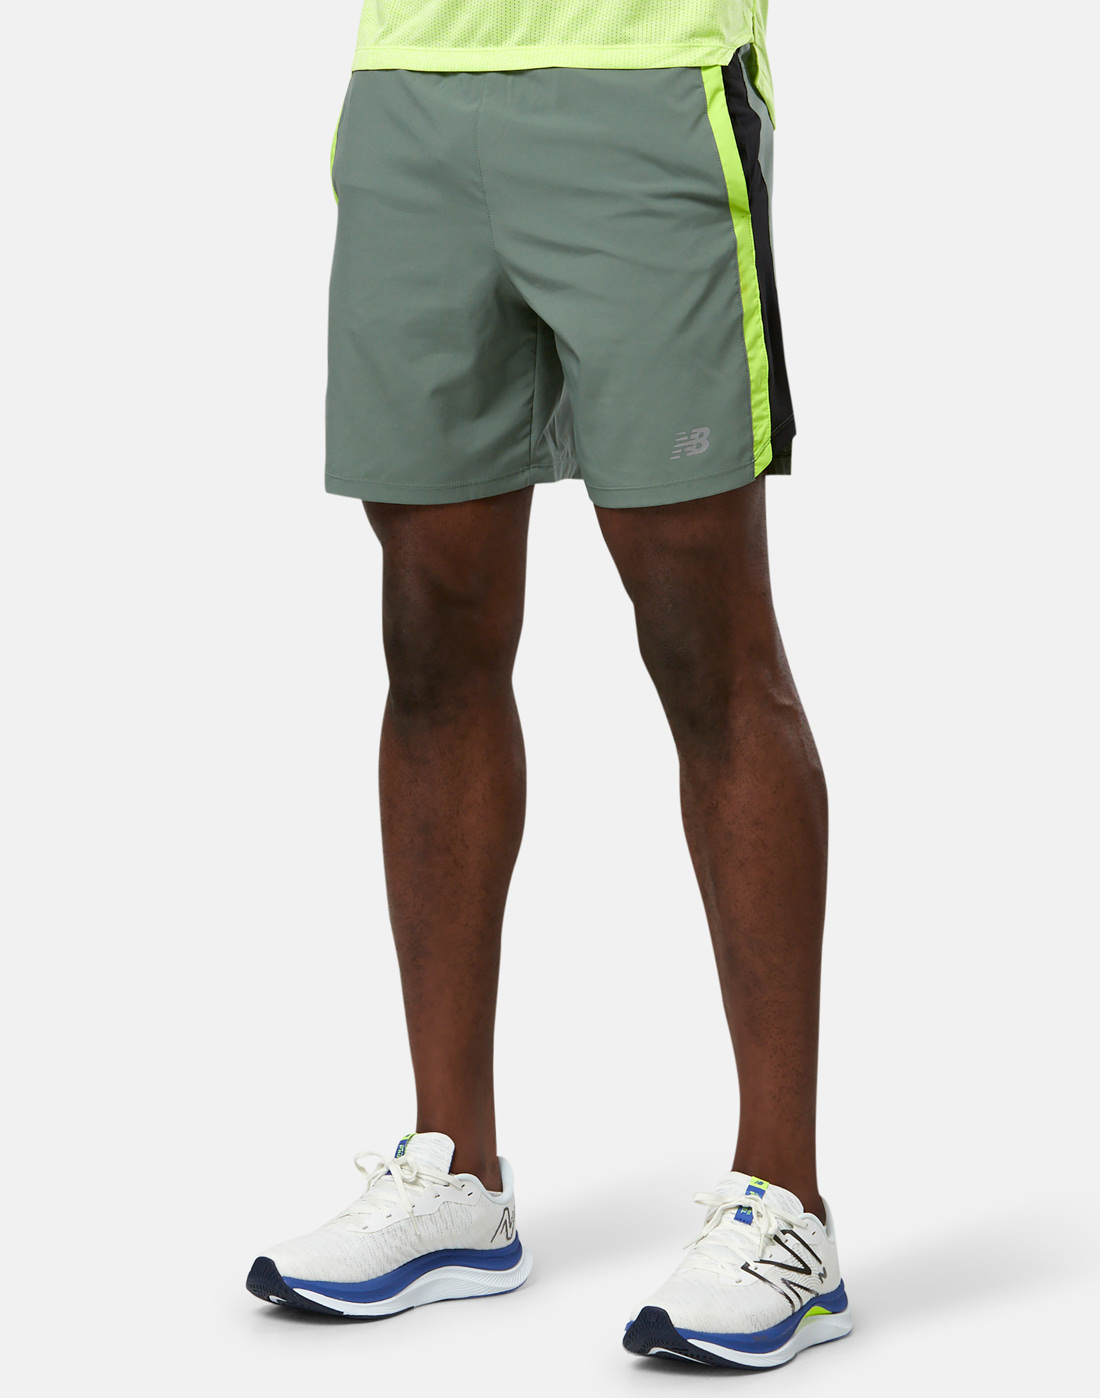 New Balance Mens Accelerate 7 Inch Shorts - Green | Life Style Sports EU